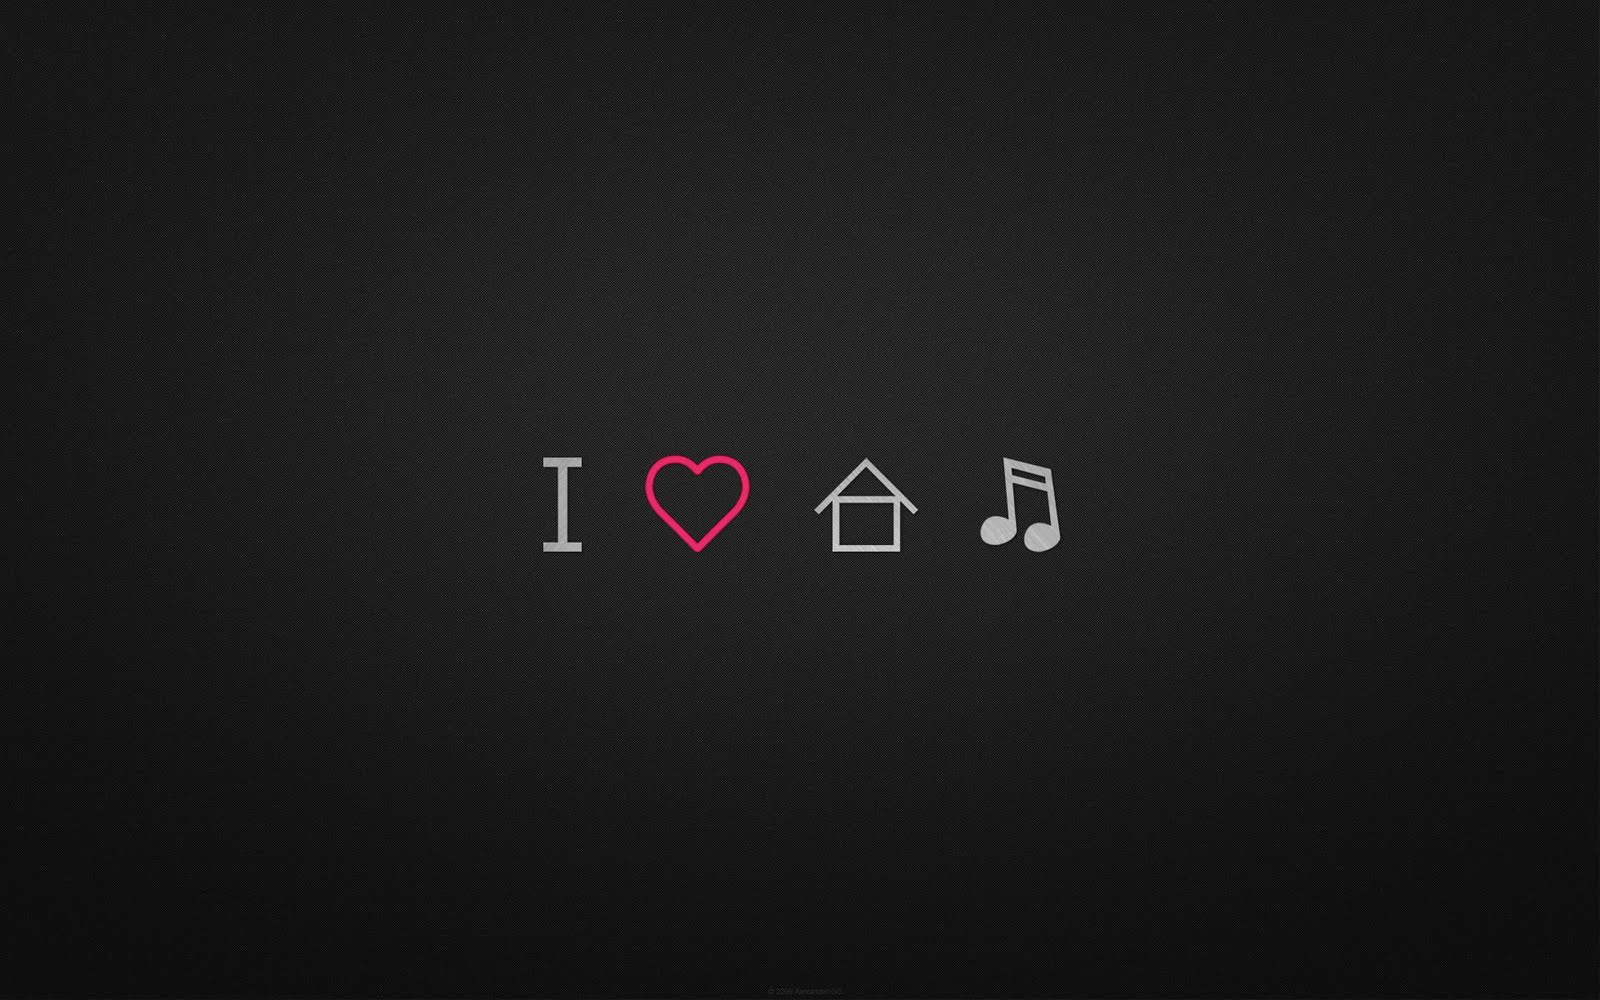 House Music Wallpaper